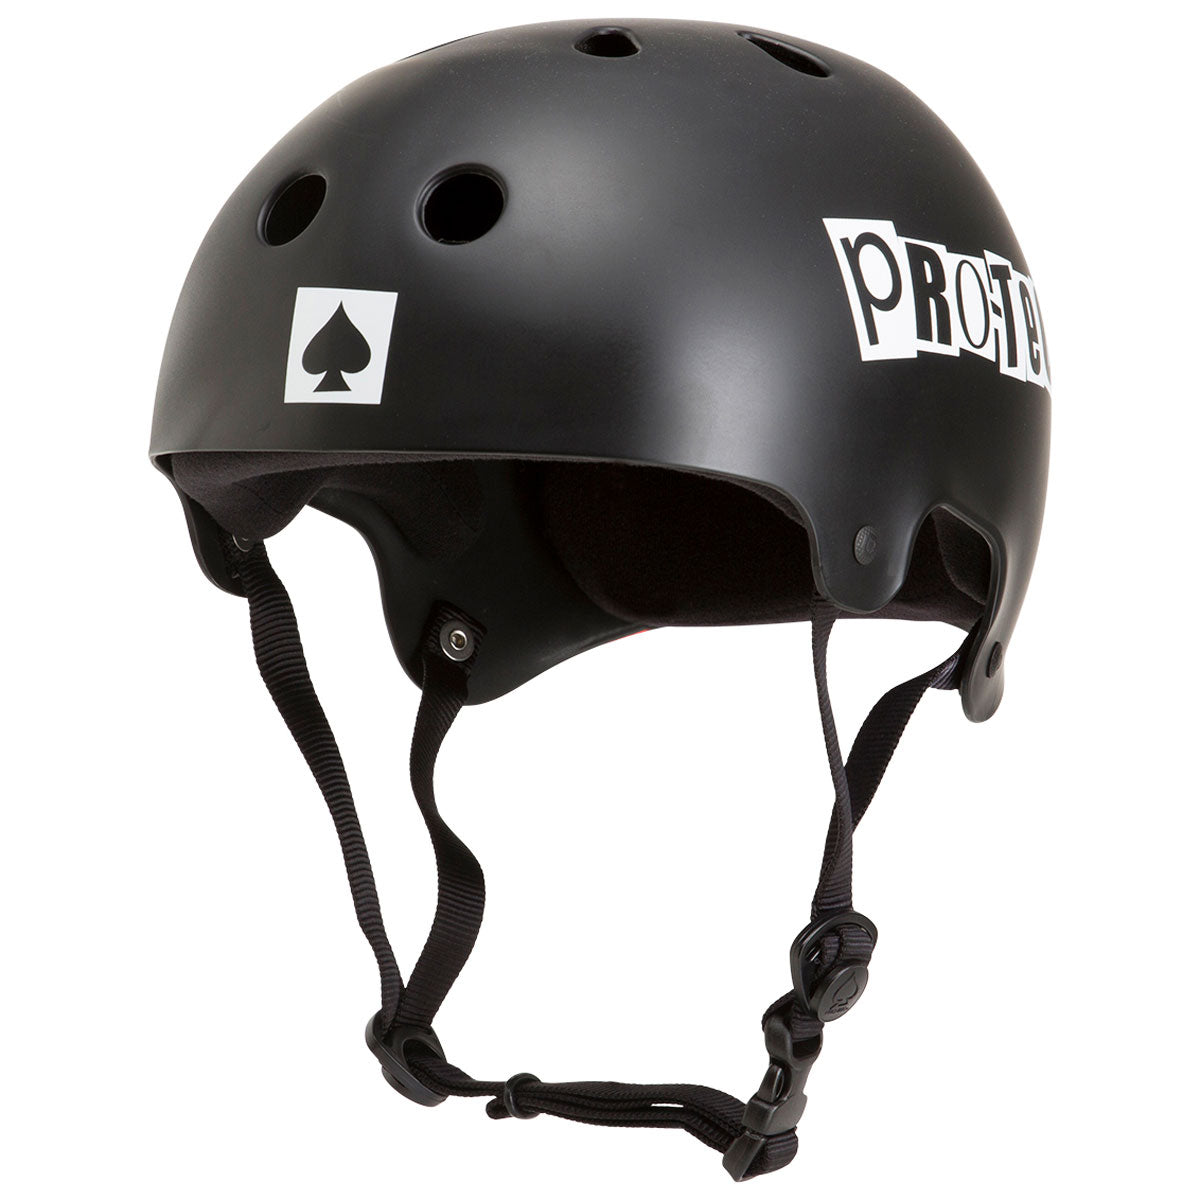 Pro-Tec The Bucky Skate Punk Helmet - Matte Black image 1